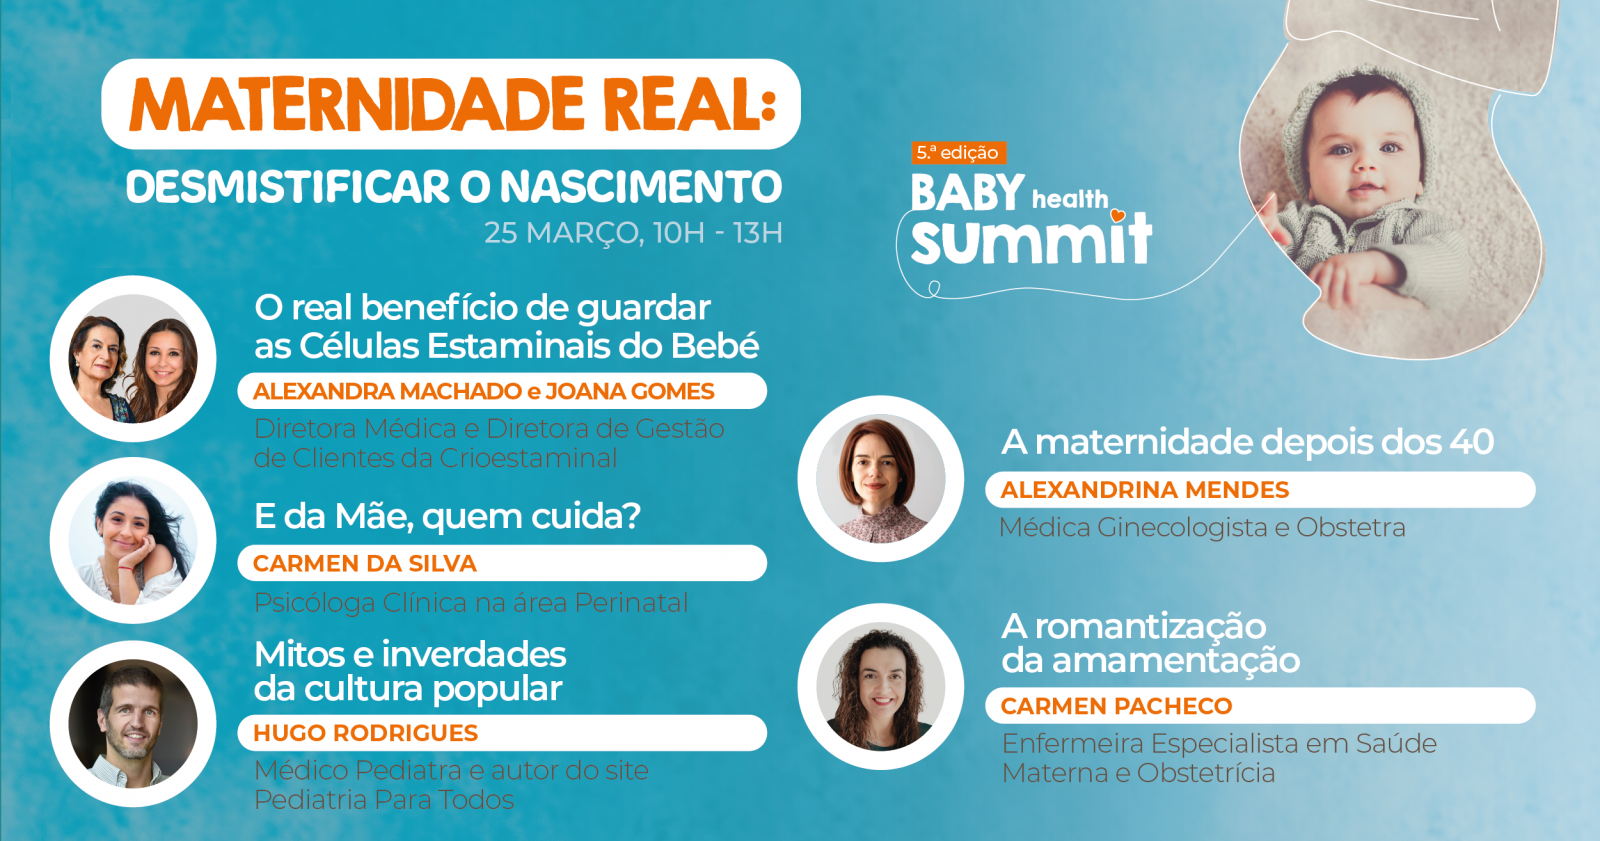 Maternidade real em debate no Baby Health Summit